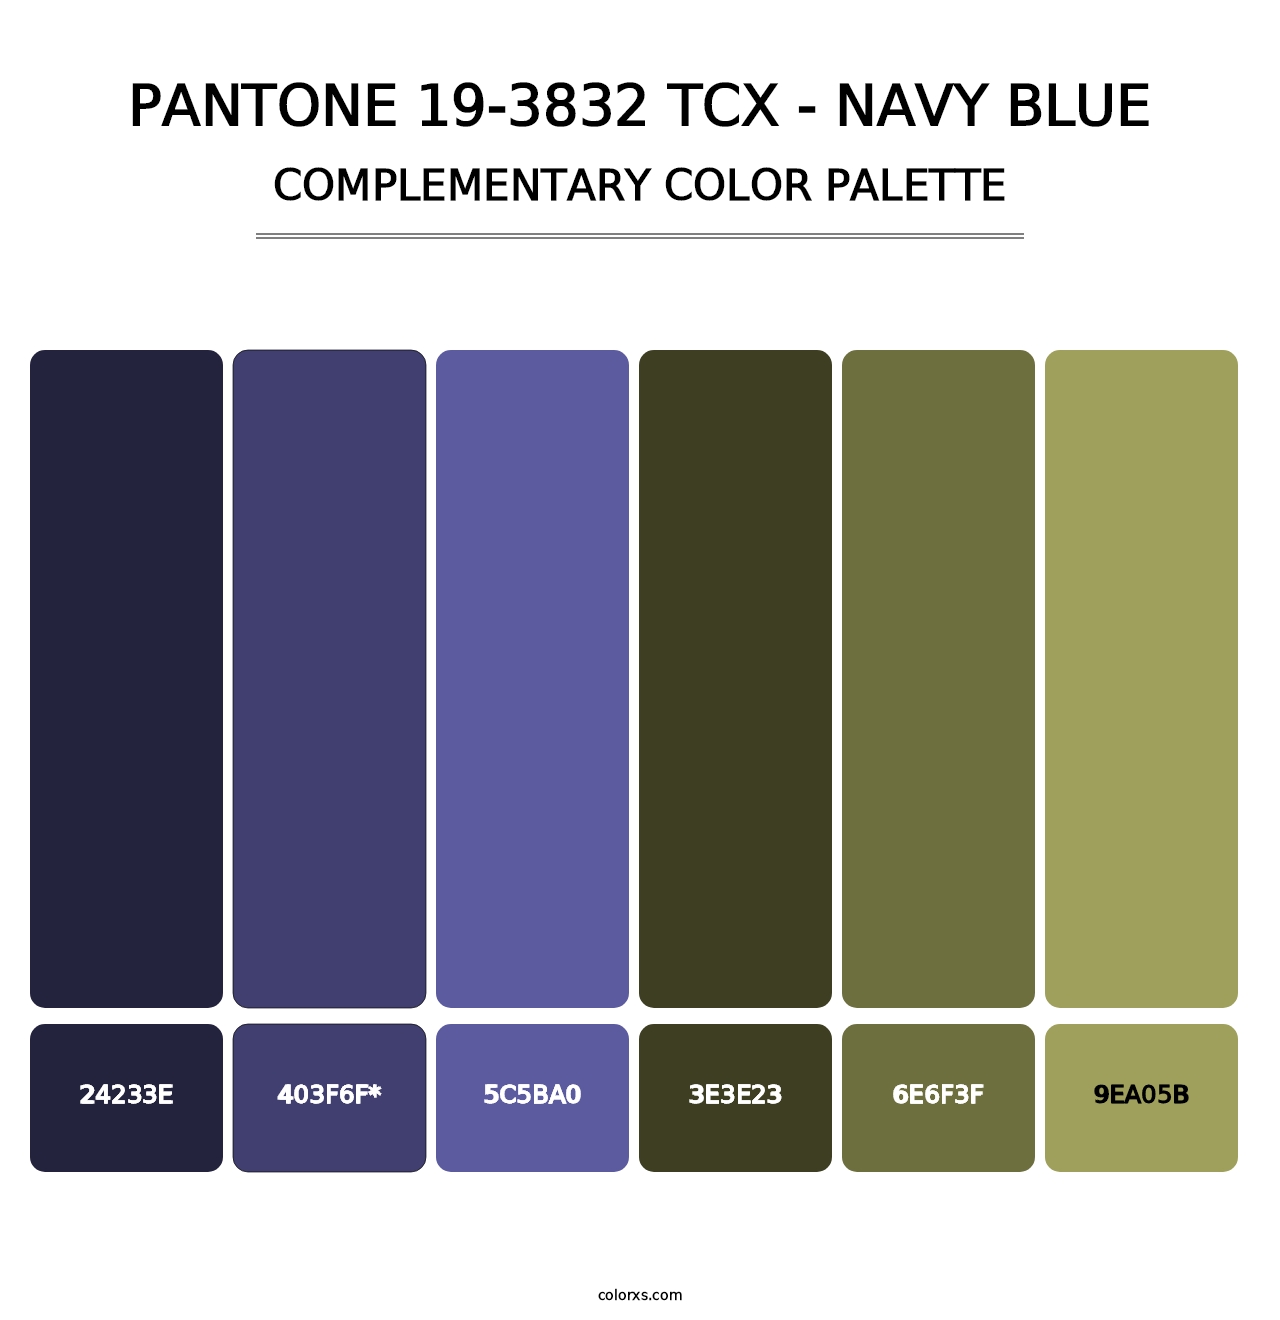 PANTONE 19-3832 TCX - Navy Blue - Complementary Color Palette